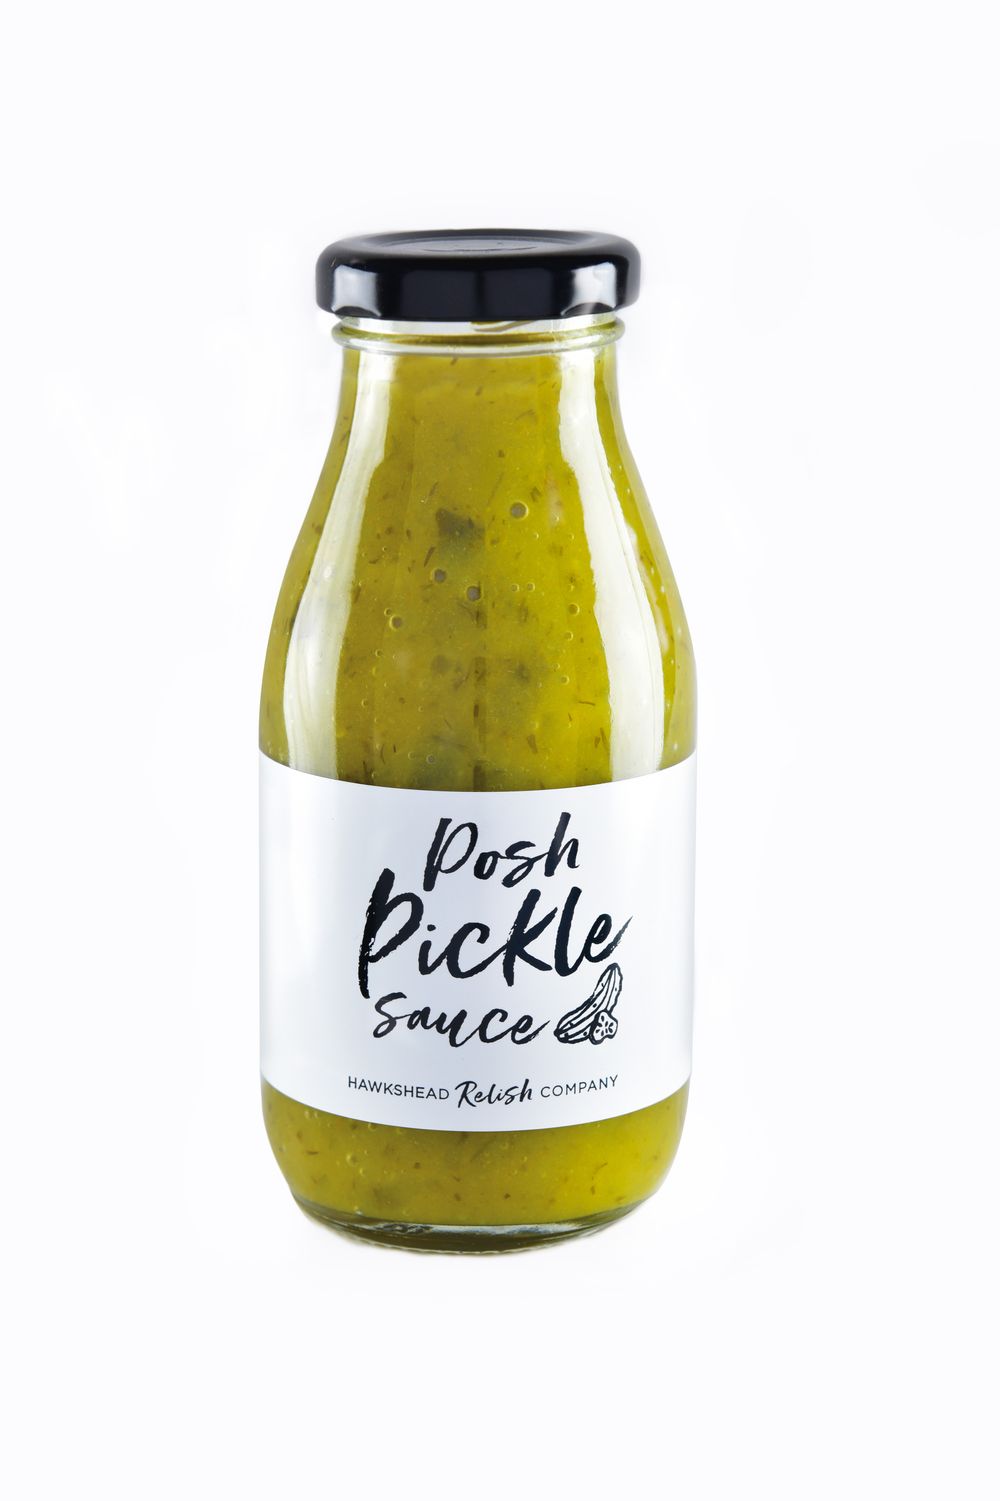 Posh Pickle Sauce